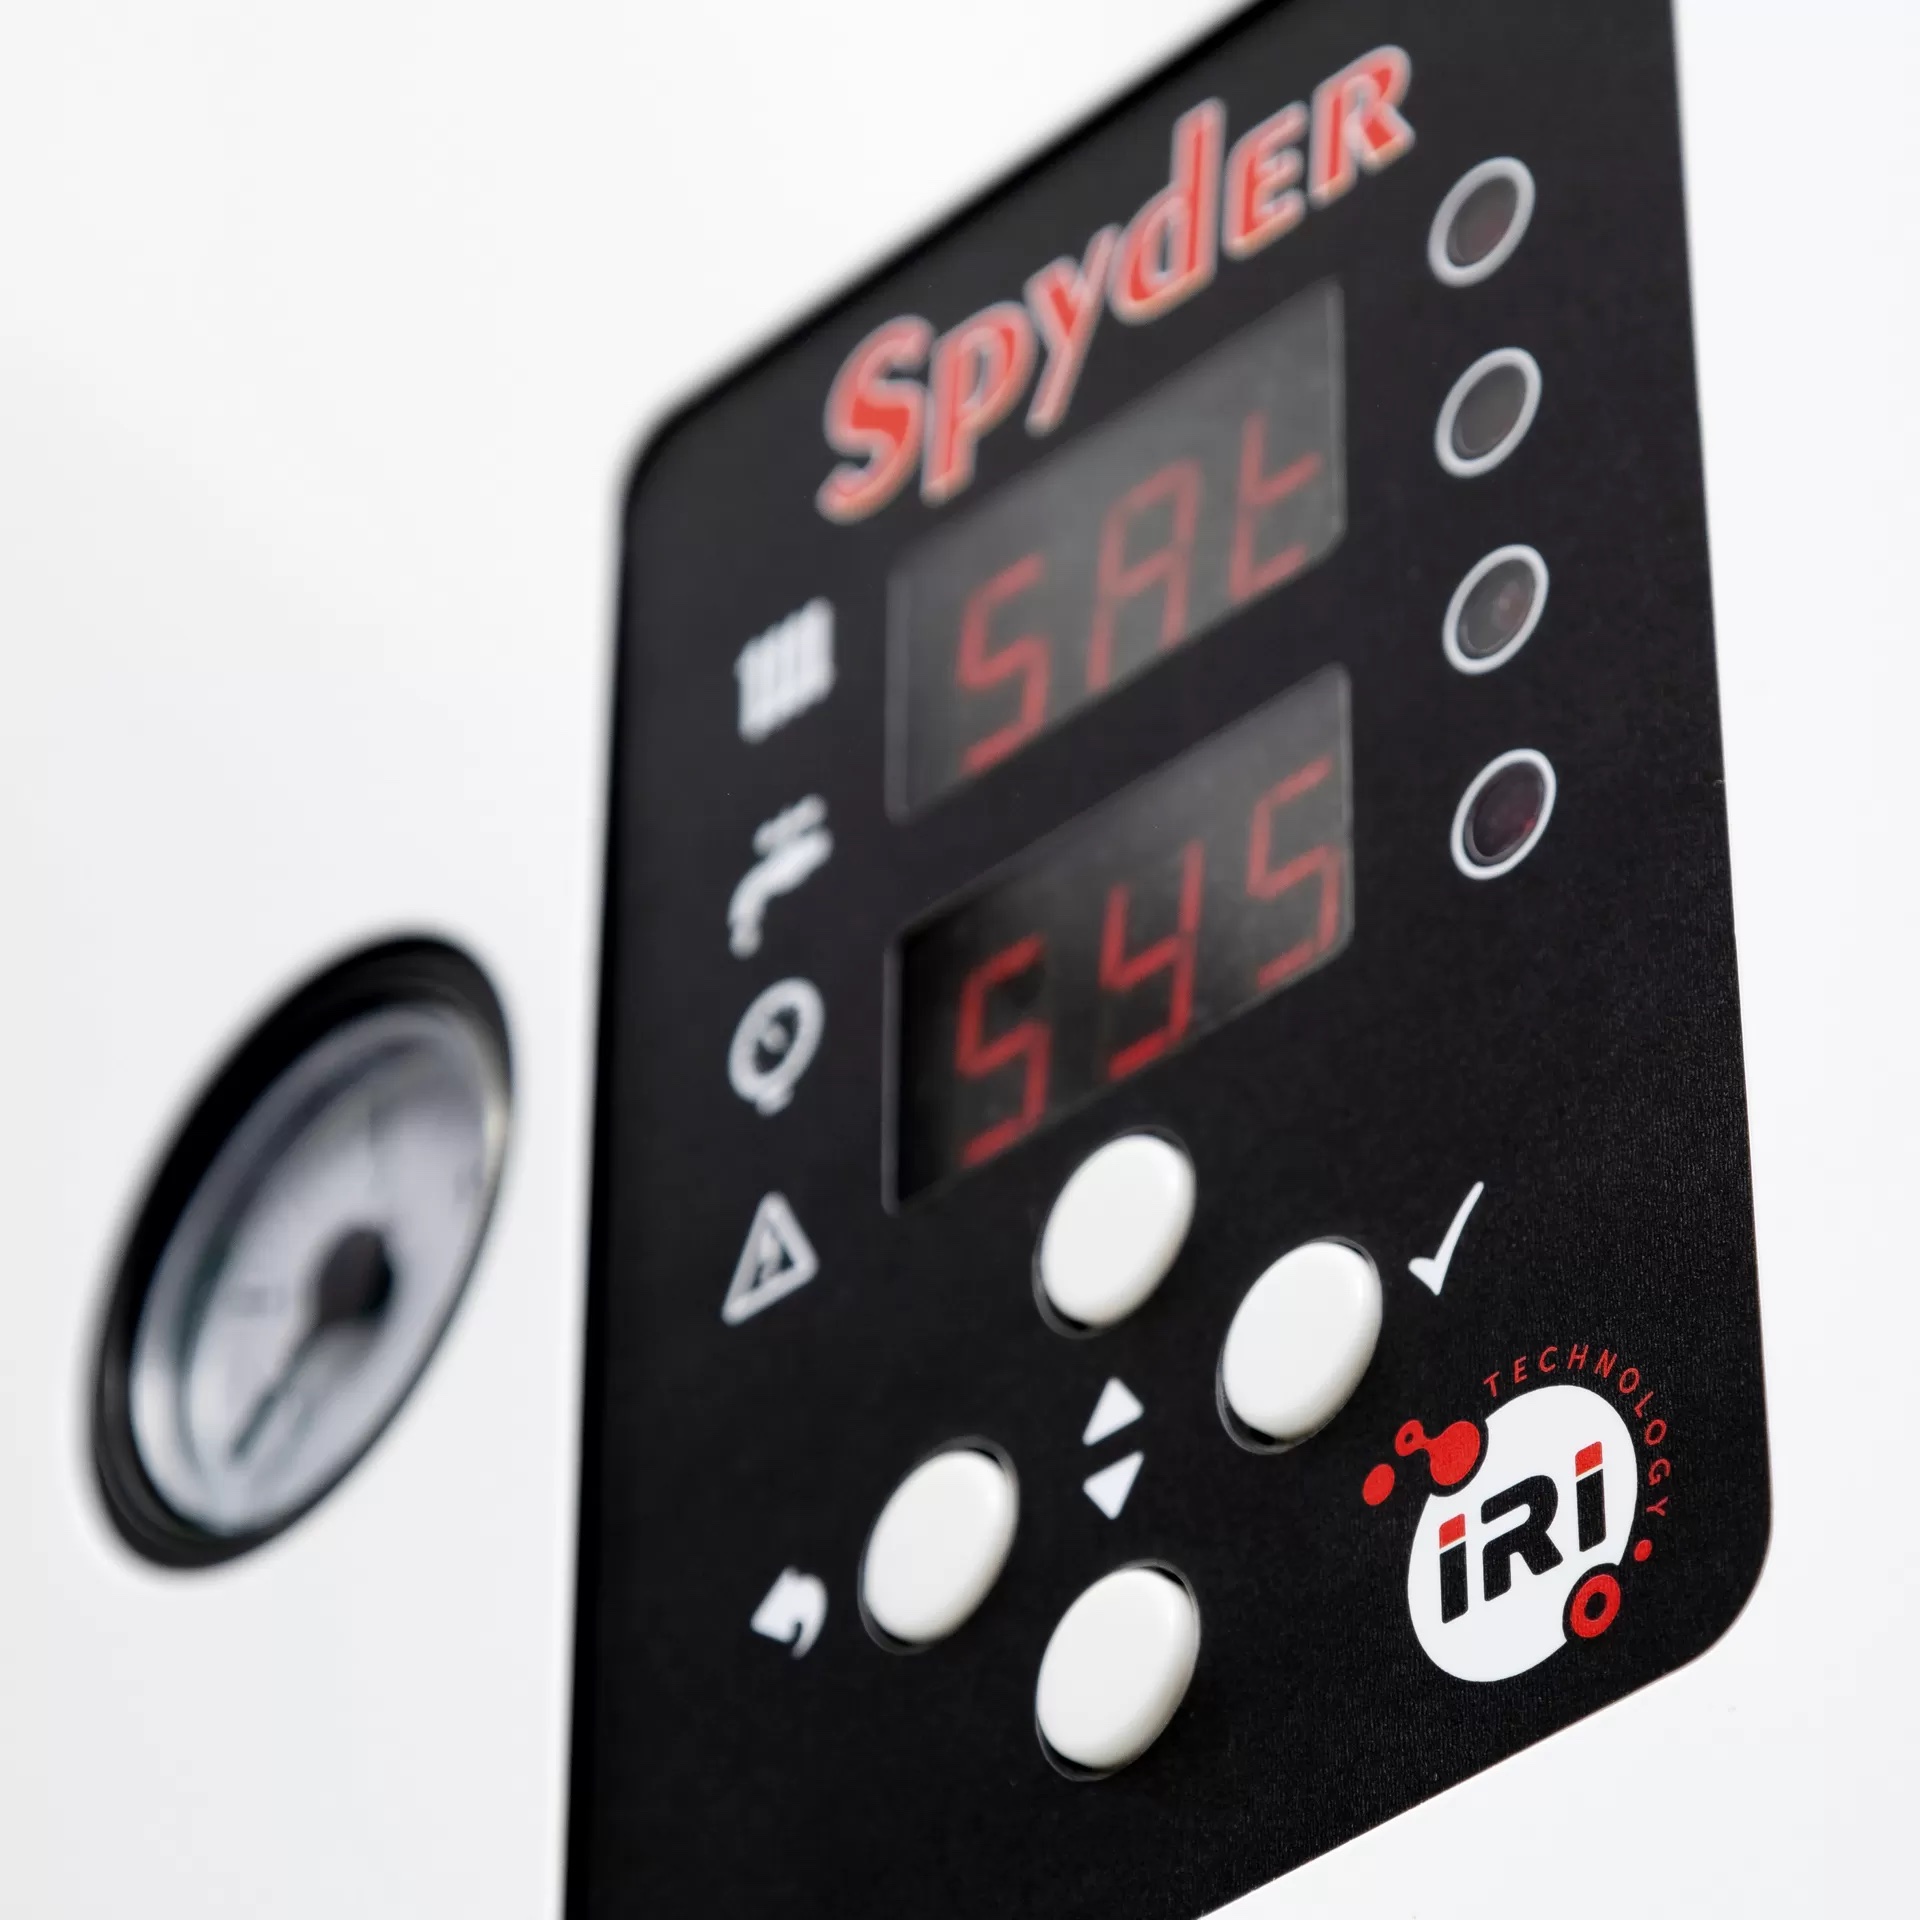 Електричний котел SAT Systems Spider PRO  9 кВт характеристики - фотографія 7